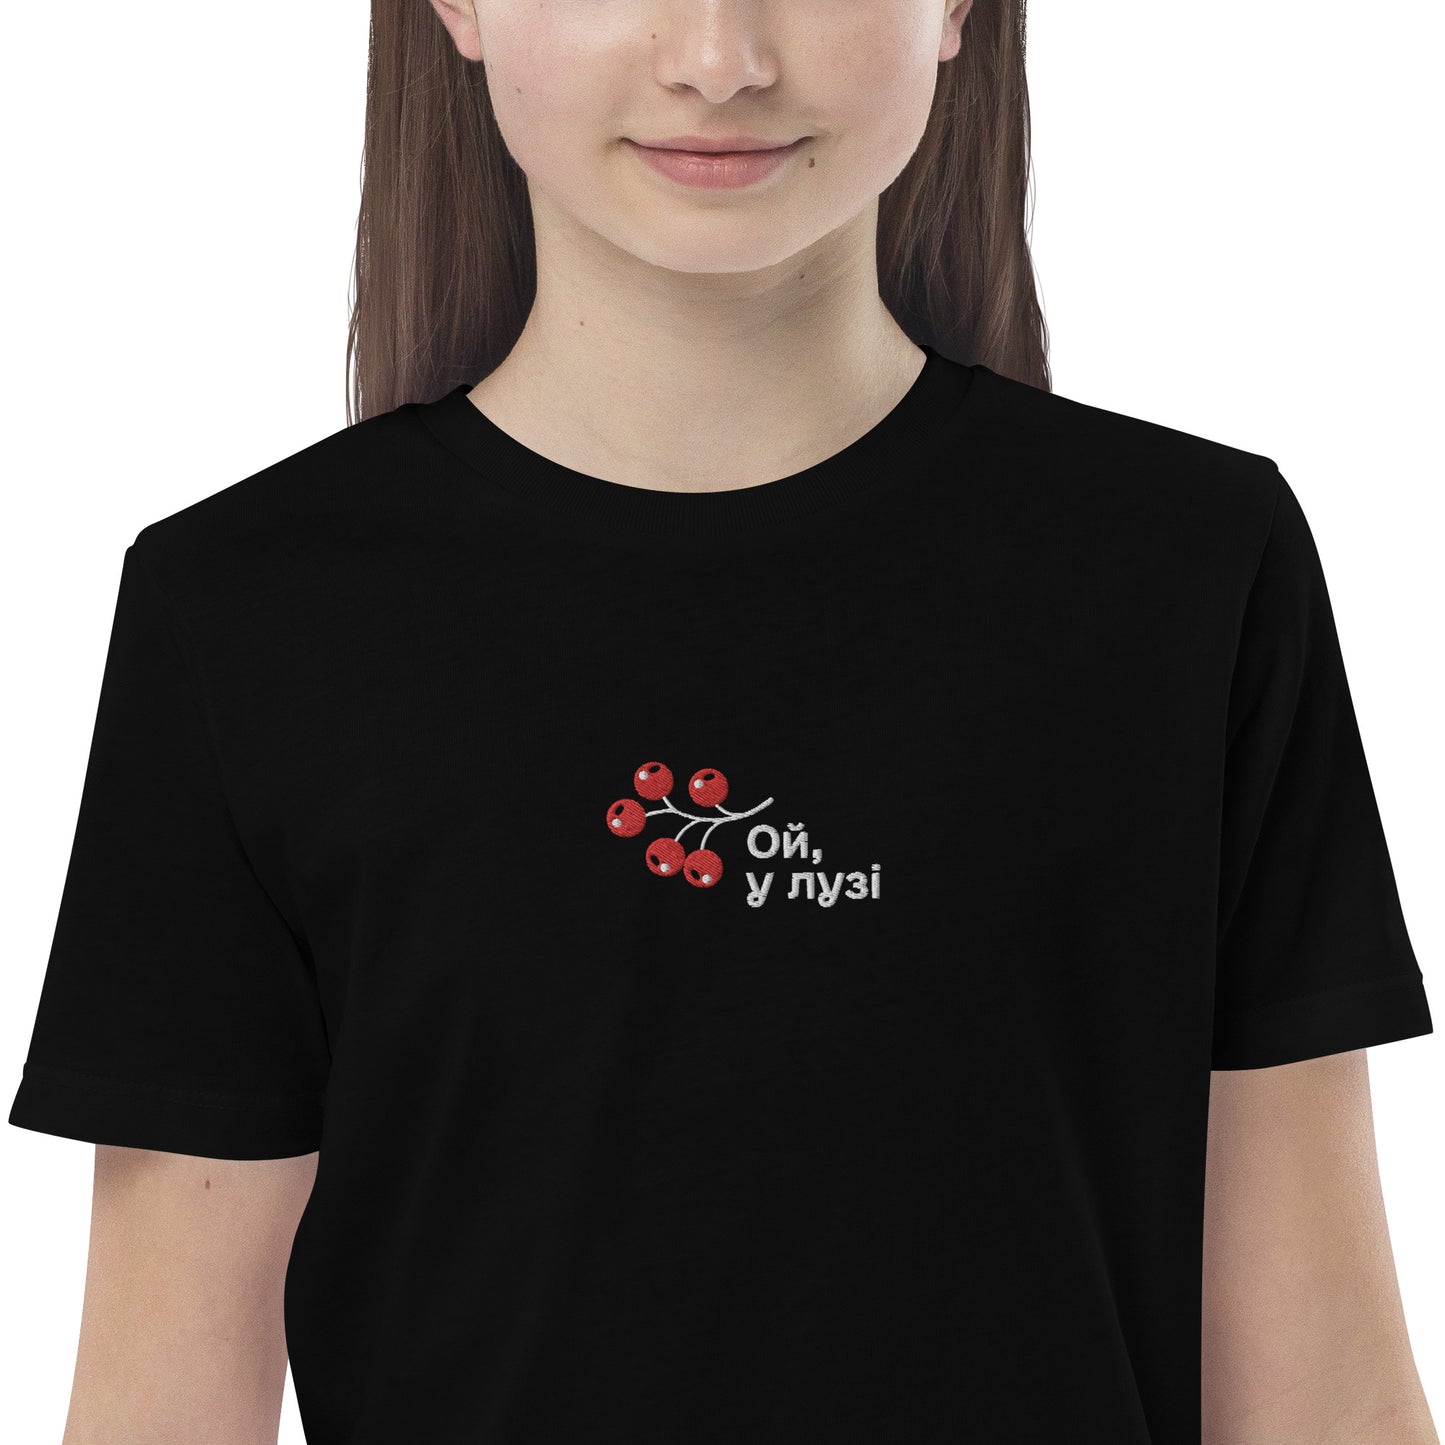 U luzi organic embroidered cotton kids t-shirt in black 3-14 yrs